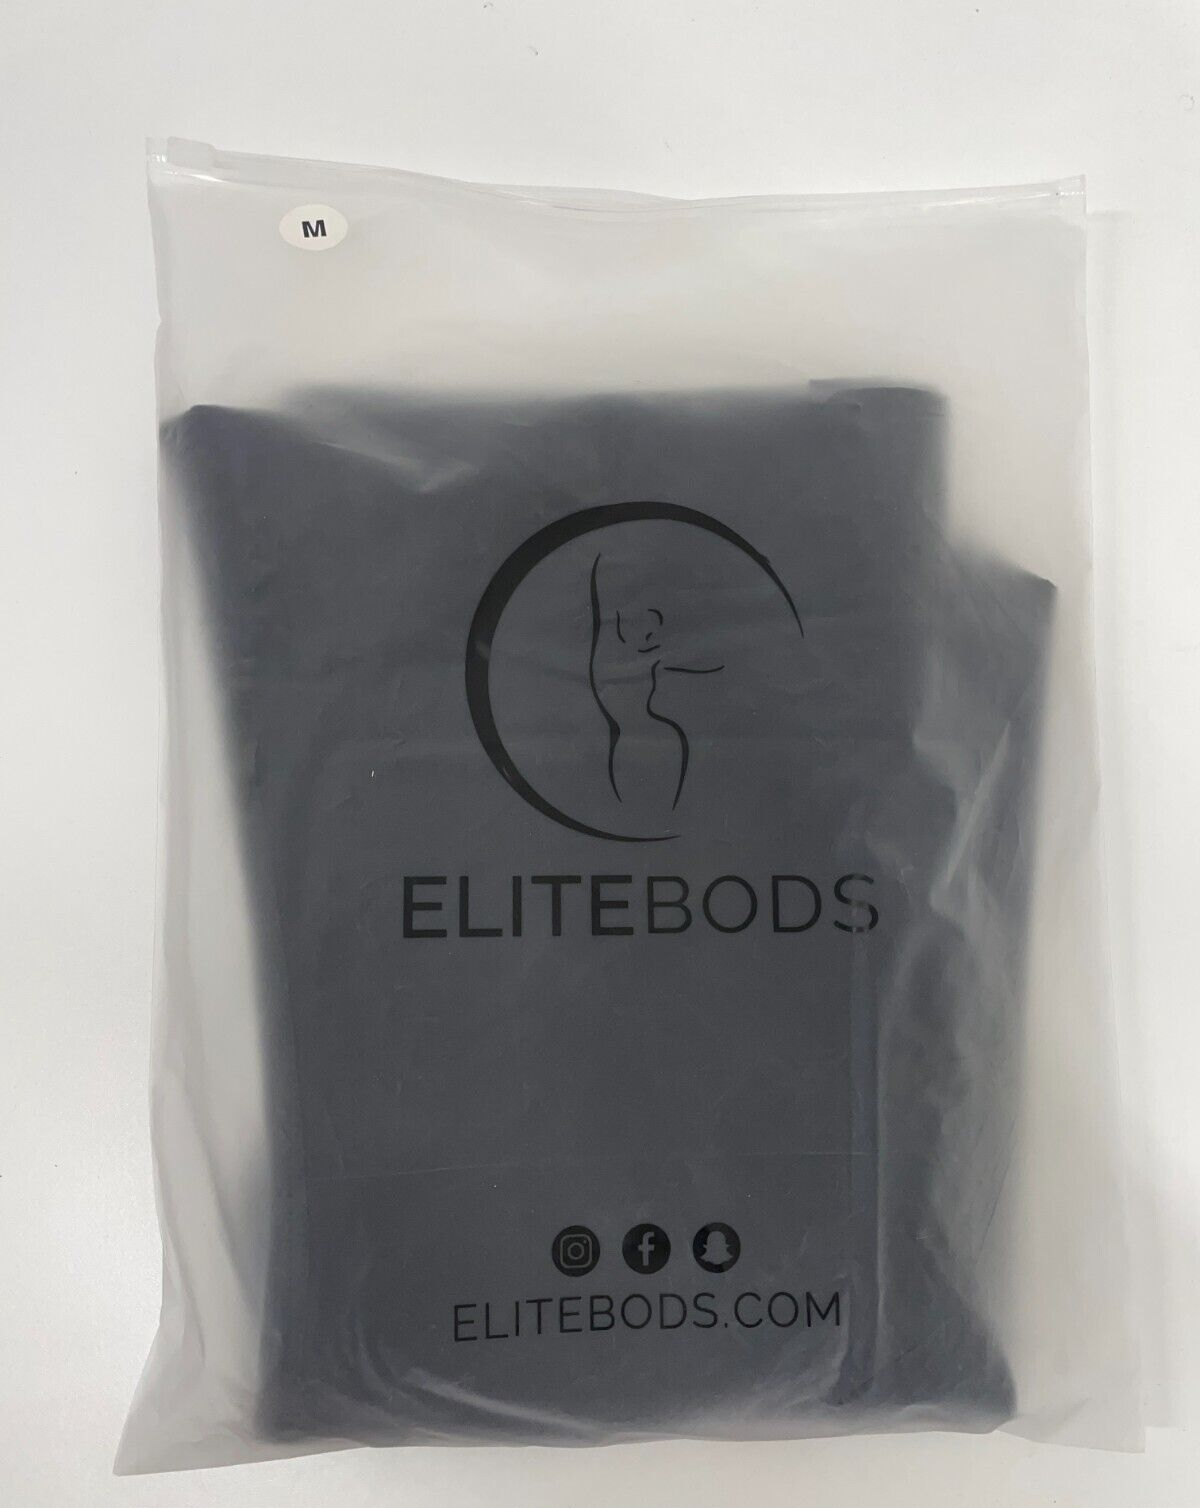 Elitebods Women's M Chaleco Waist Trainer Sweat Vest Black Workout Thermogenic